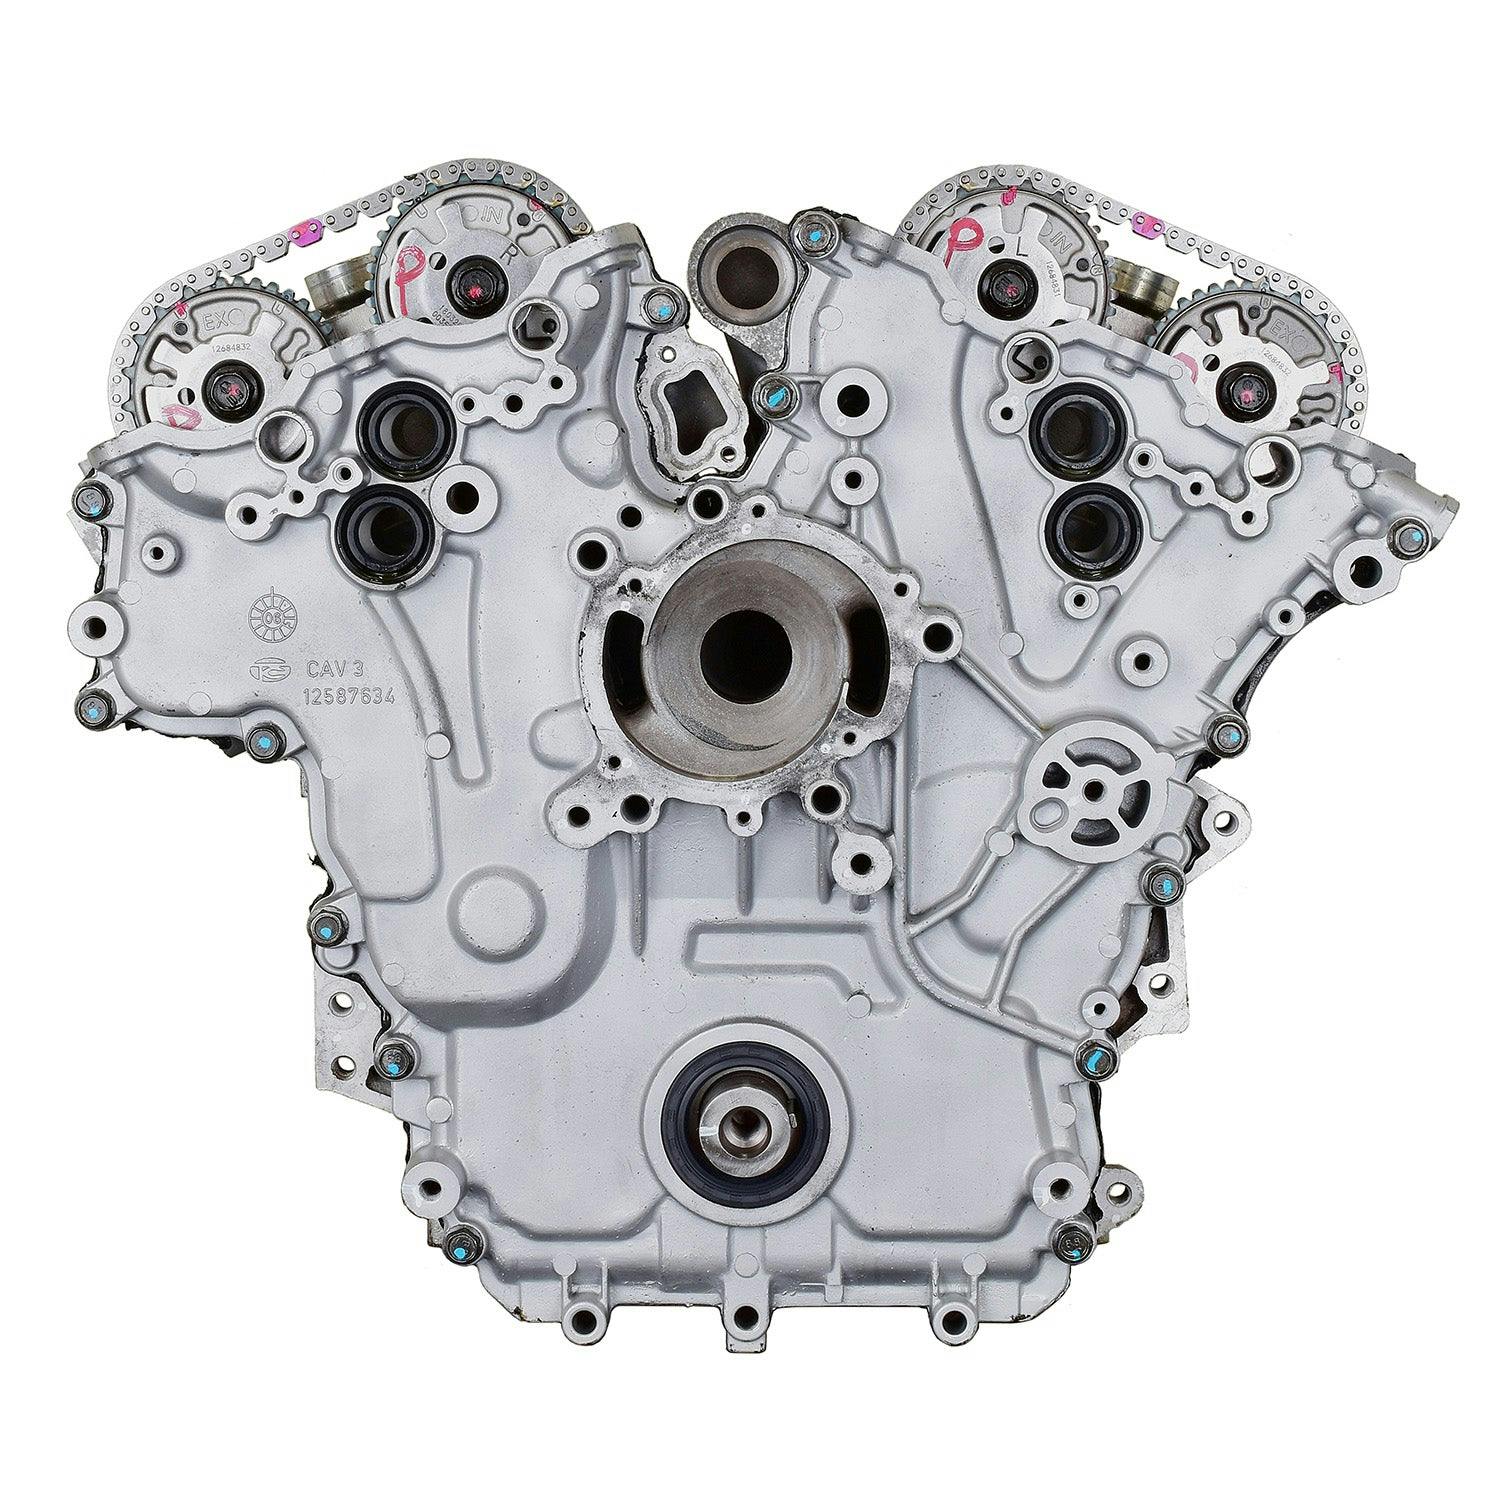 3.6L V6 Engine for 2007-2008 Buick Enclave/GMC Acadia/Saturn Outlook